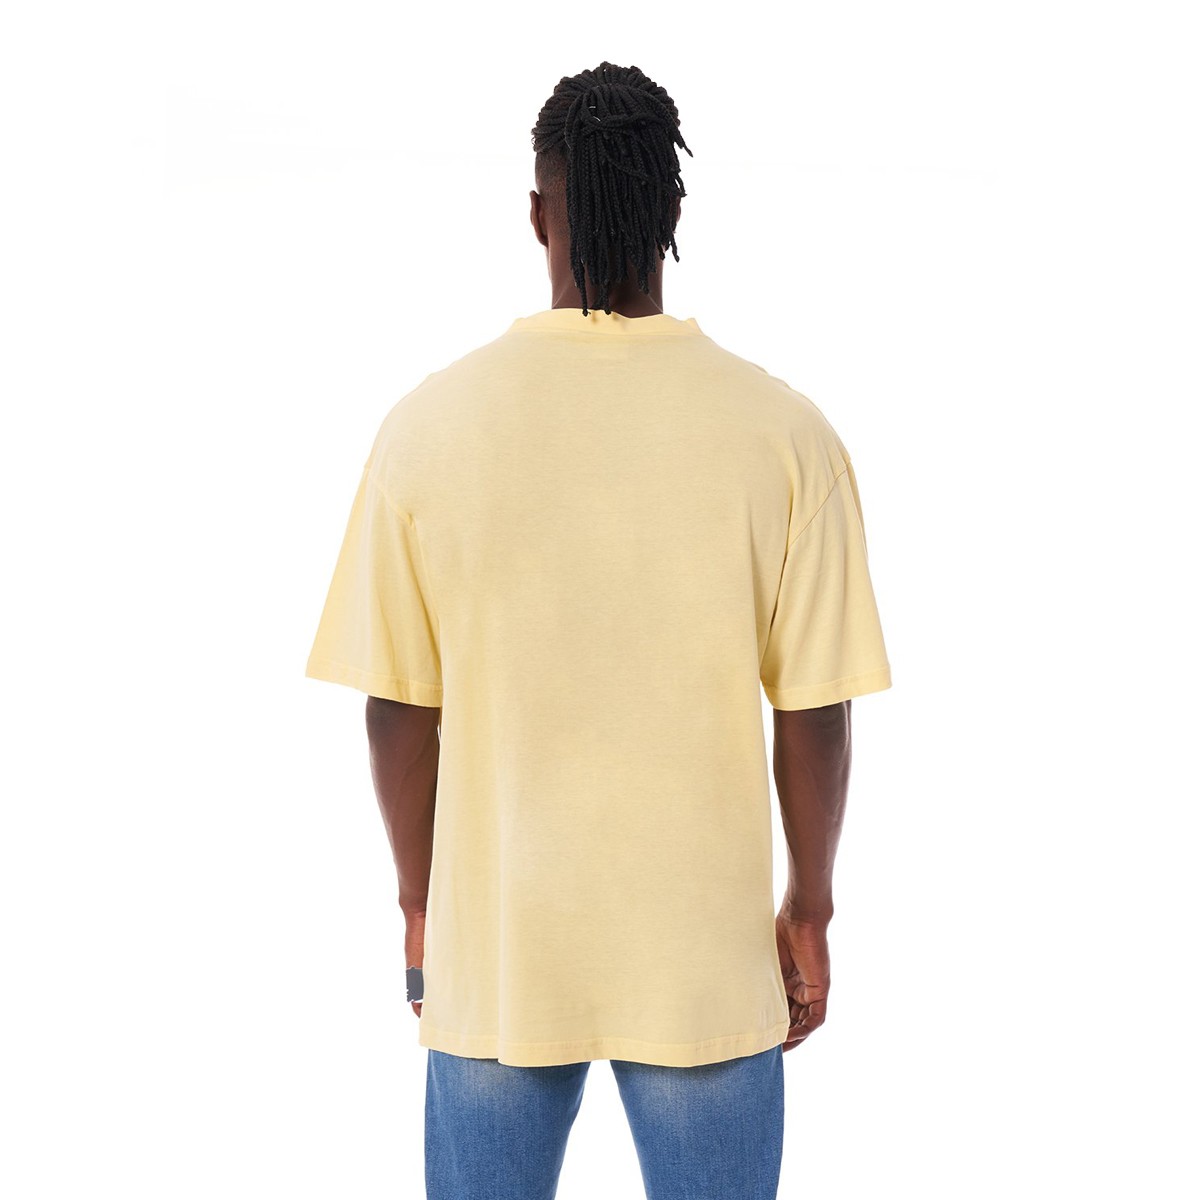 Ghetto Off Limits Born 2 Skate Yellow Oversize T-Shirt TS-20004